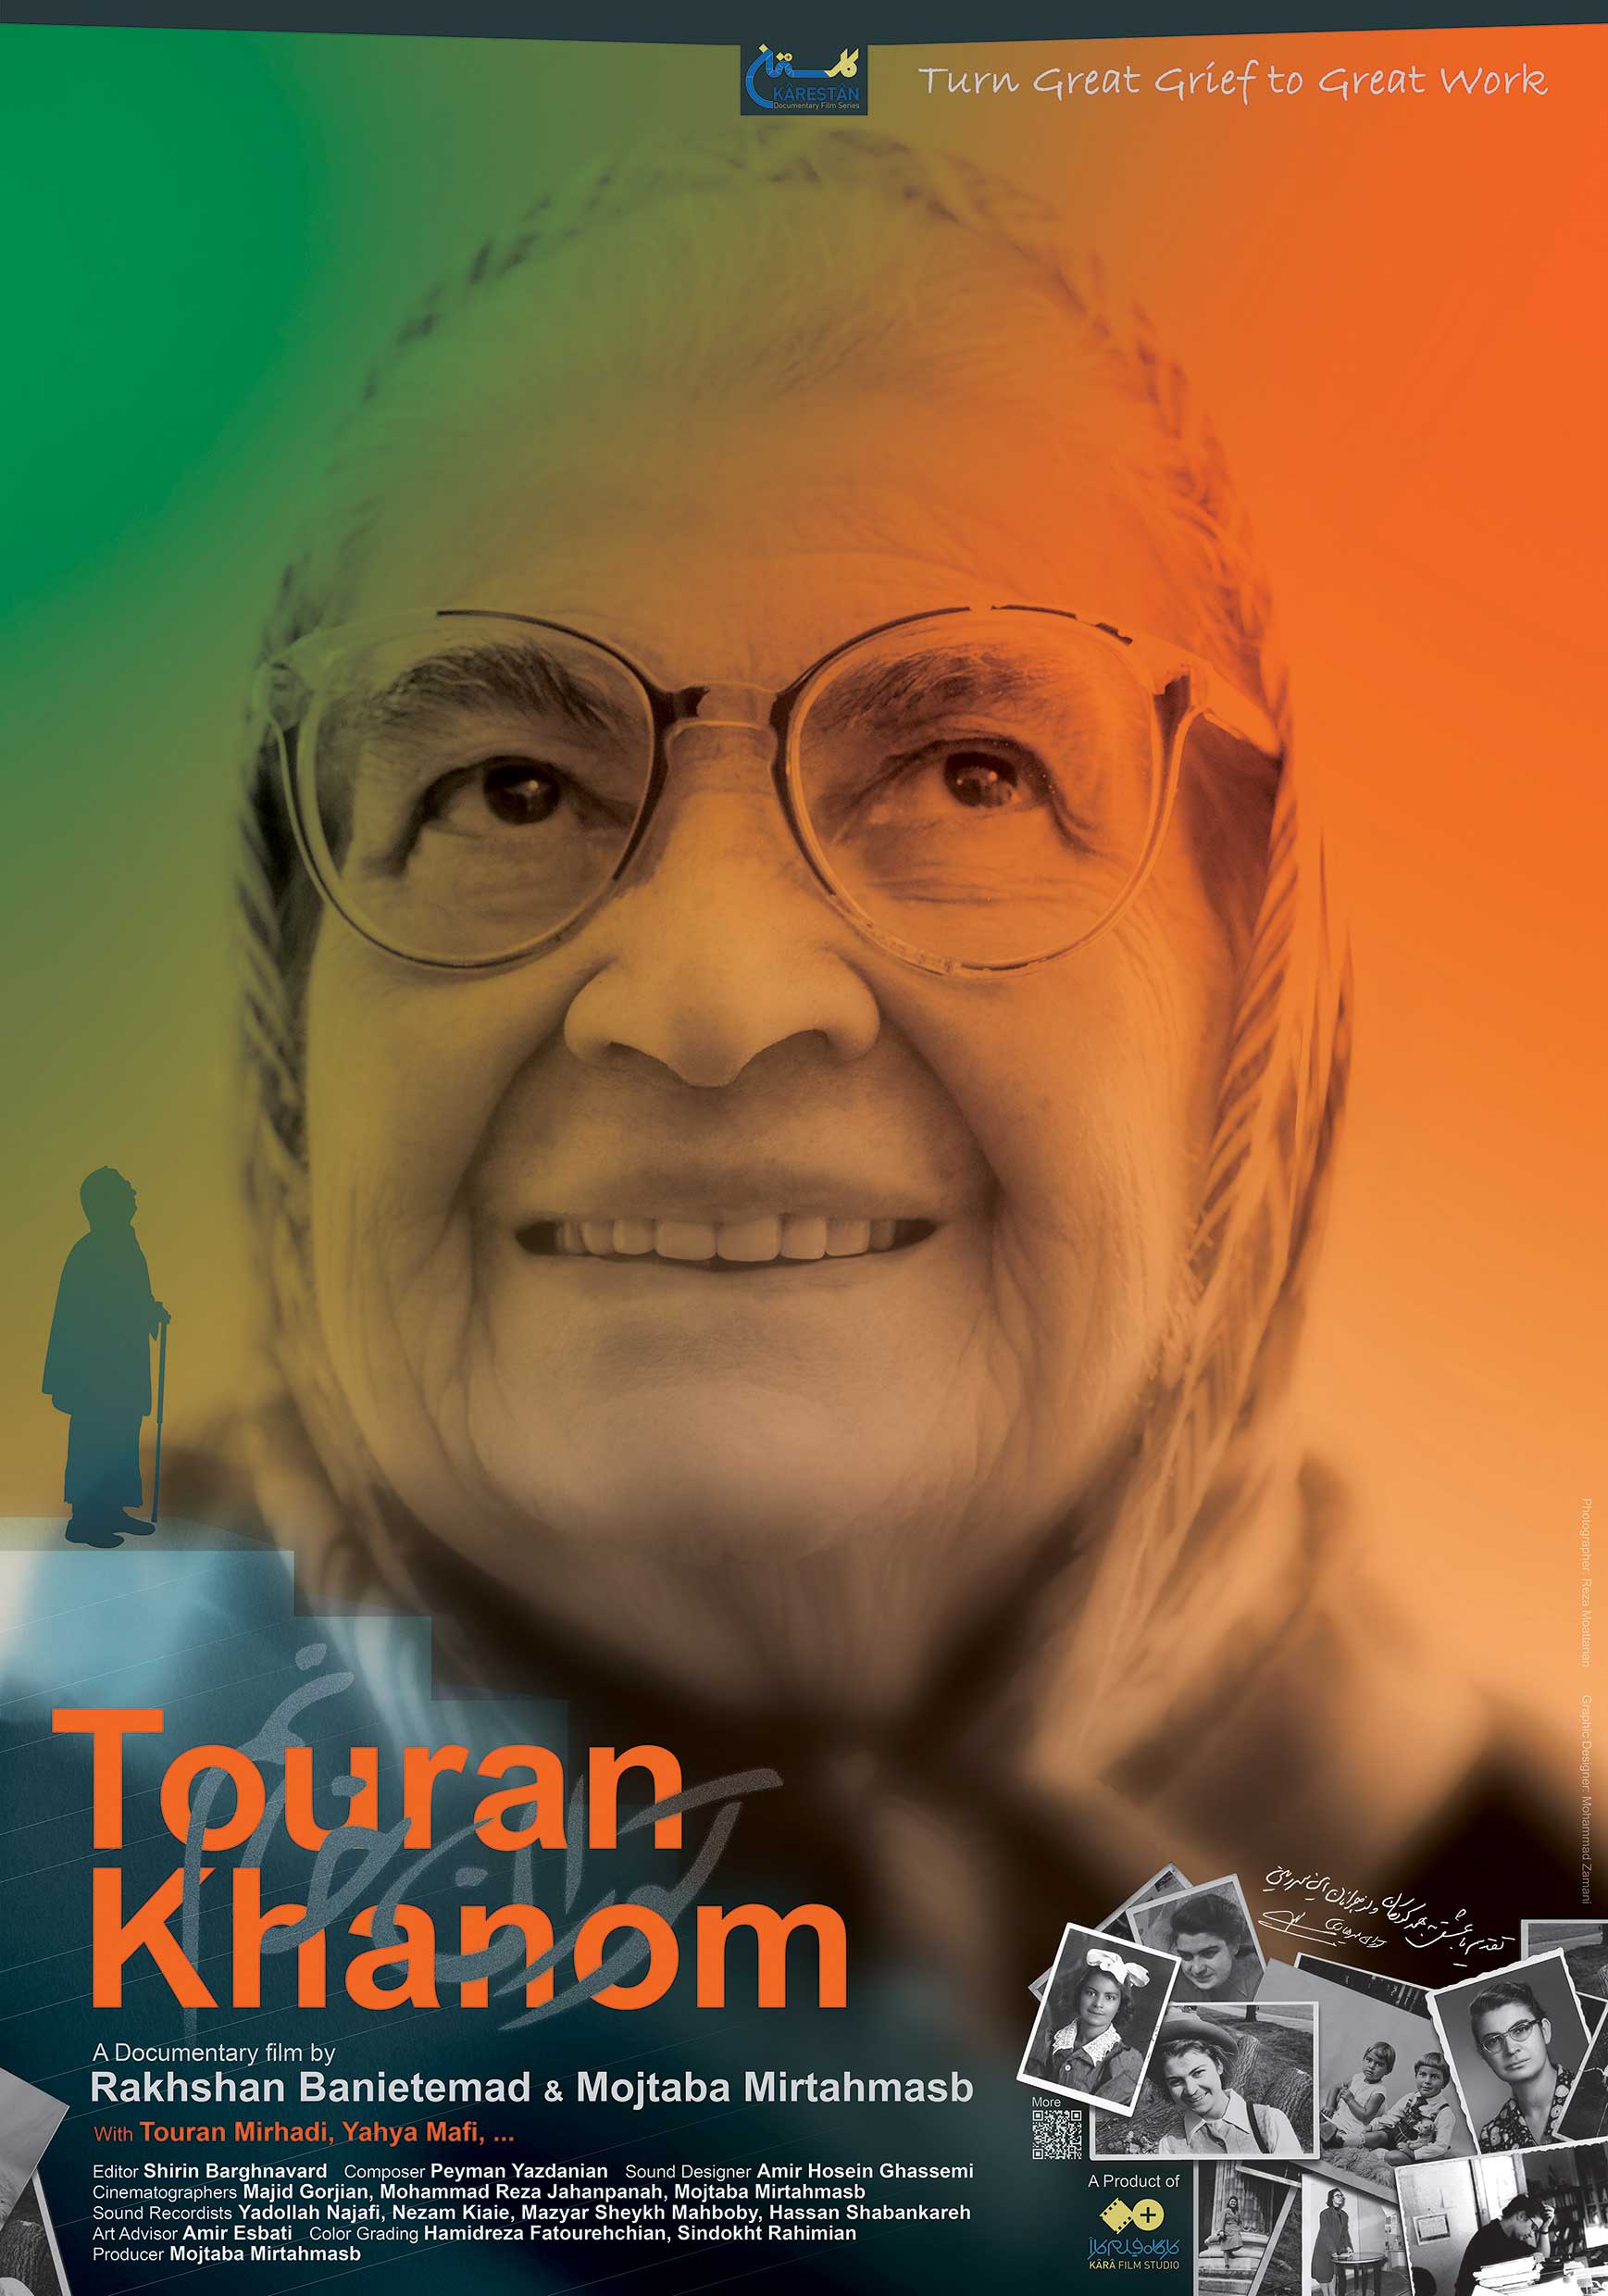 TOURAN KHANOM // An Iranian Film Coming to Virtual Cinema November 20, 2020 - December 3, 2020